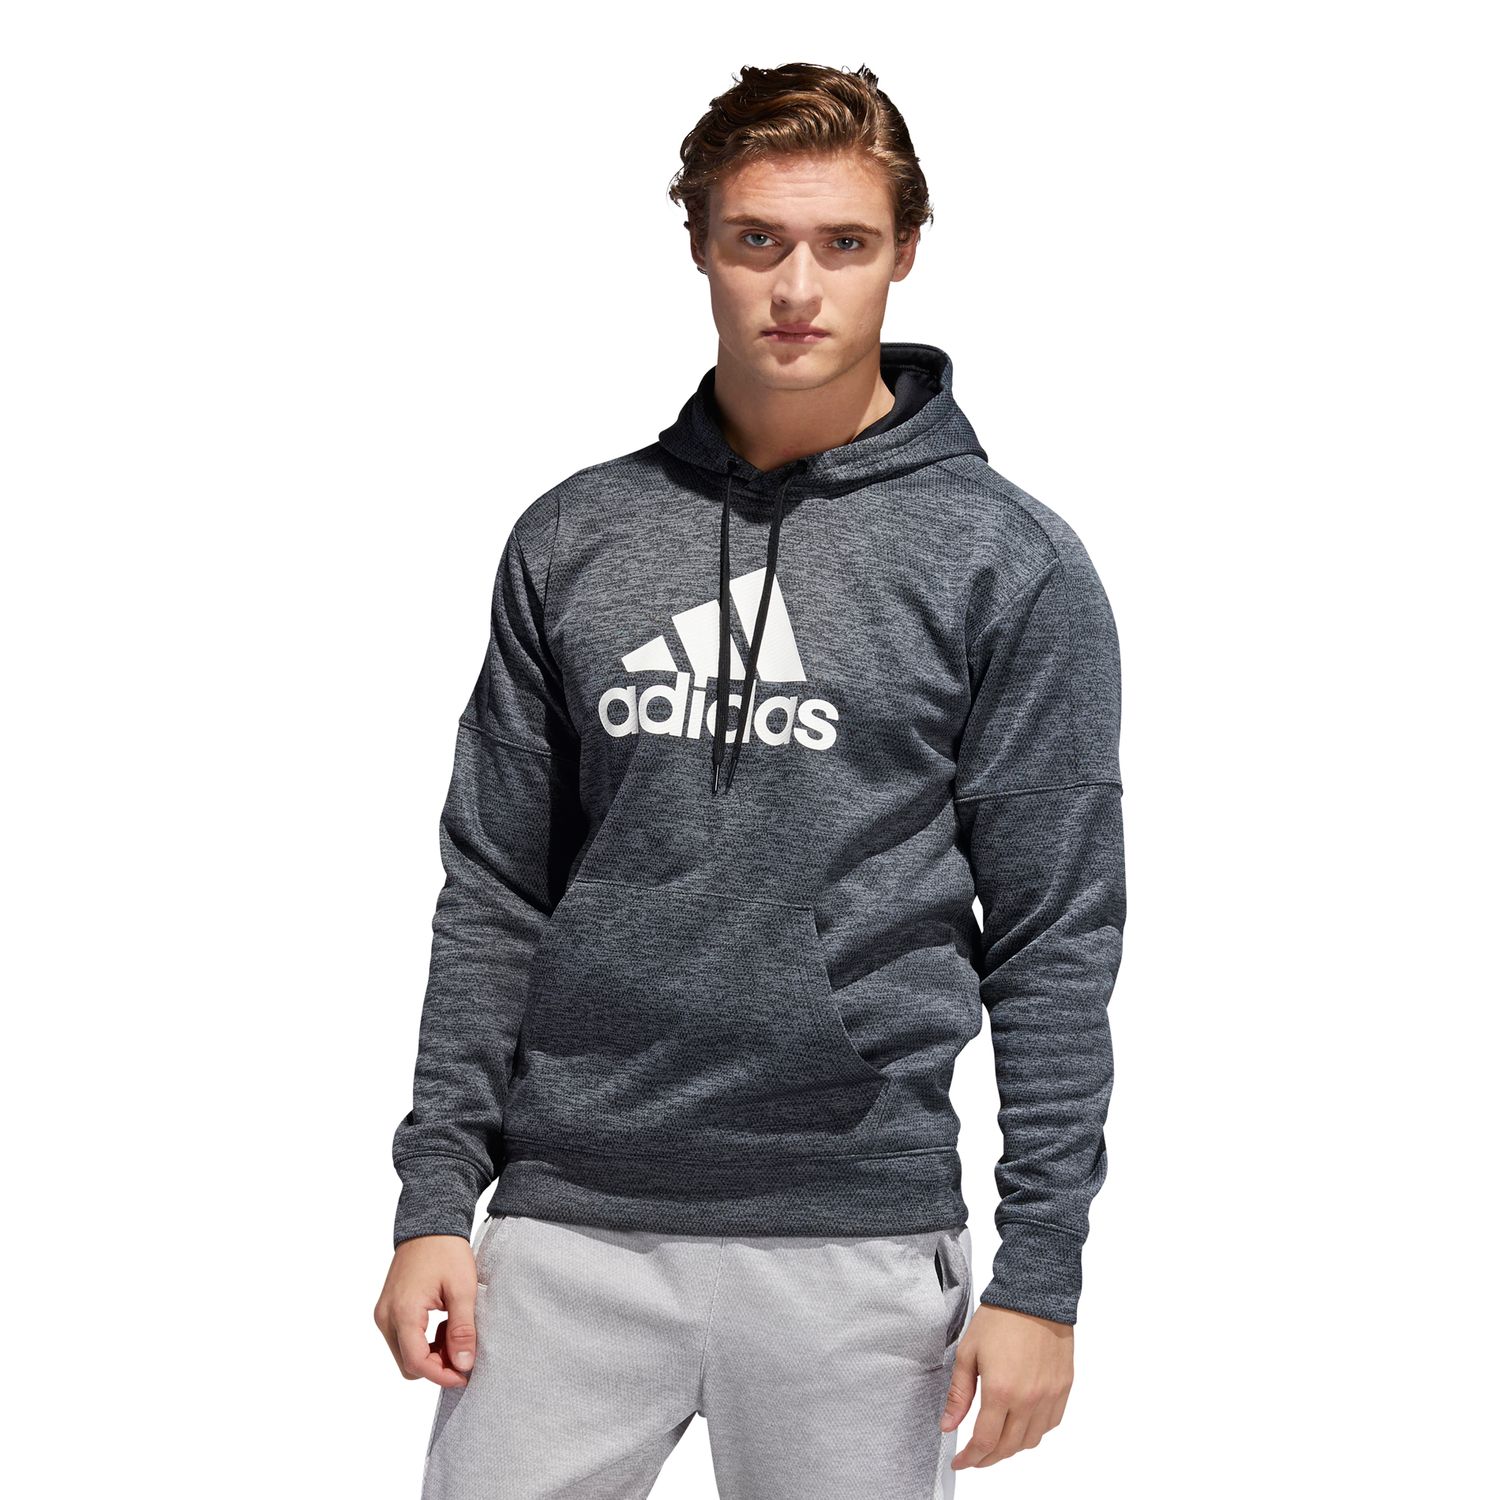 adidas team fleece hoodie